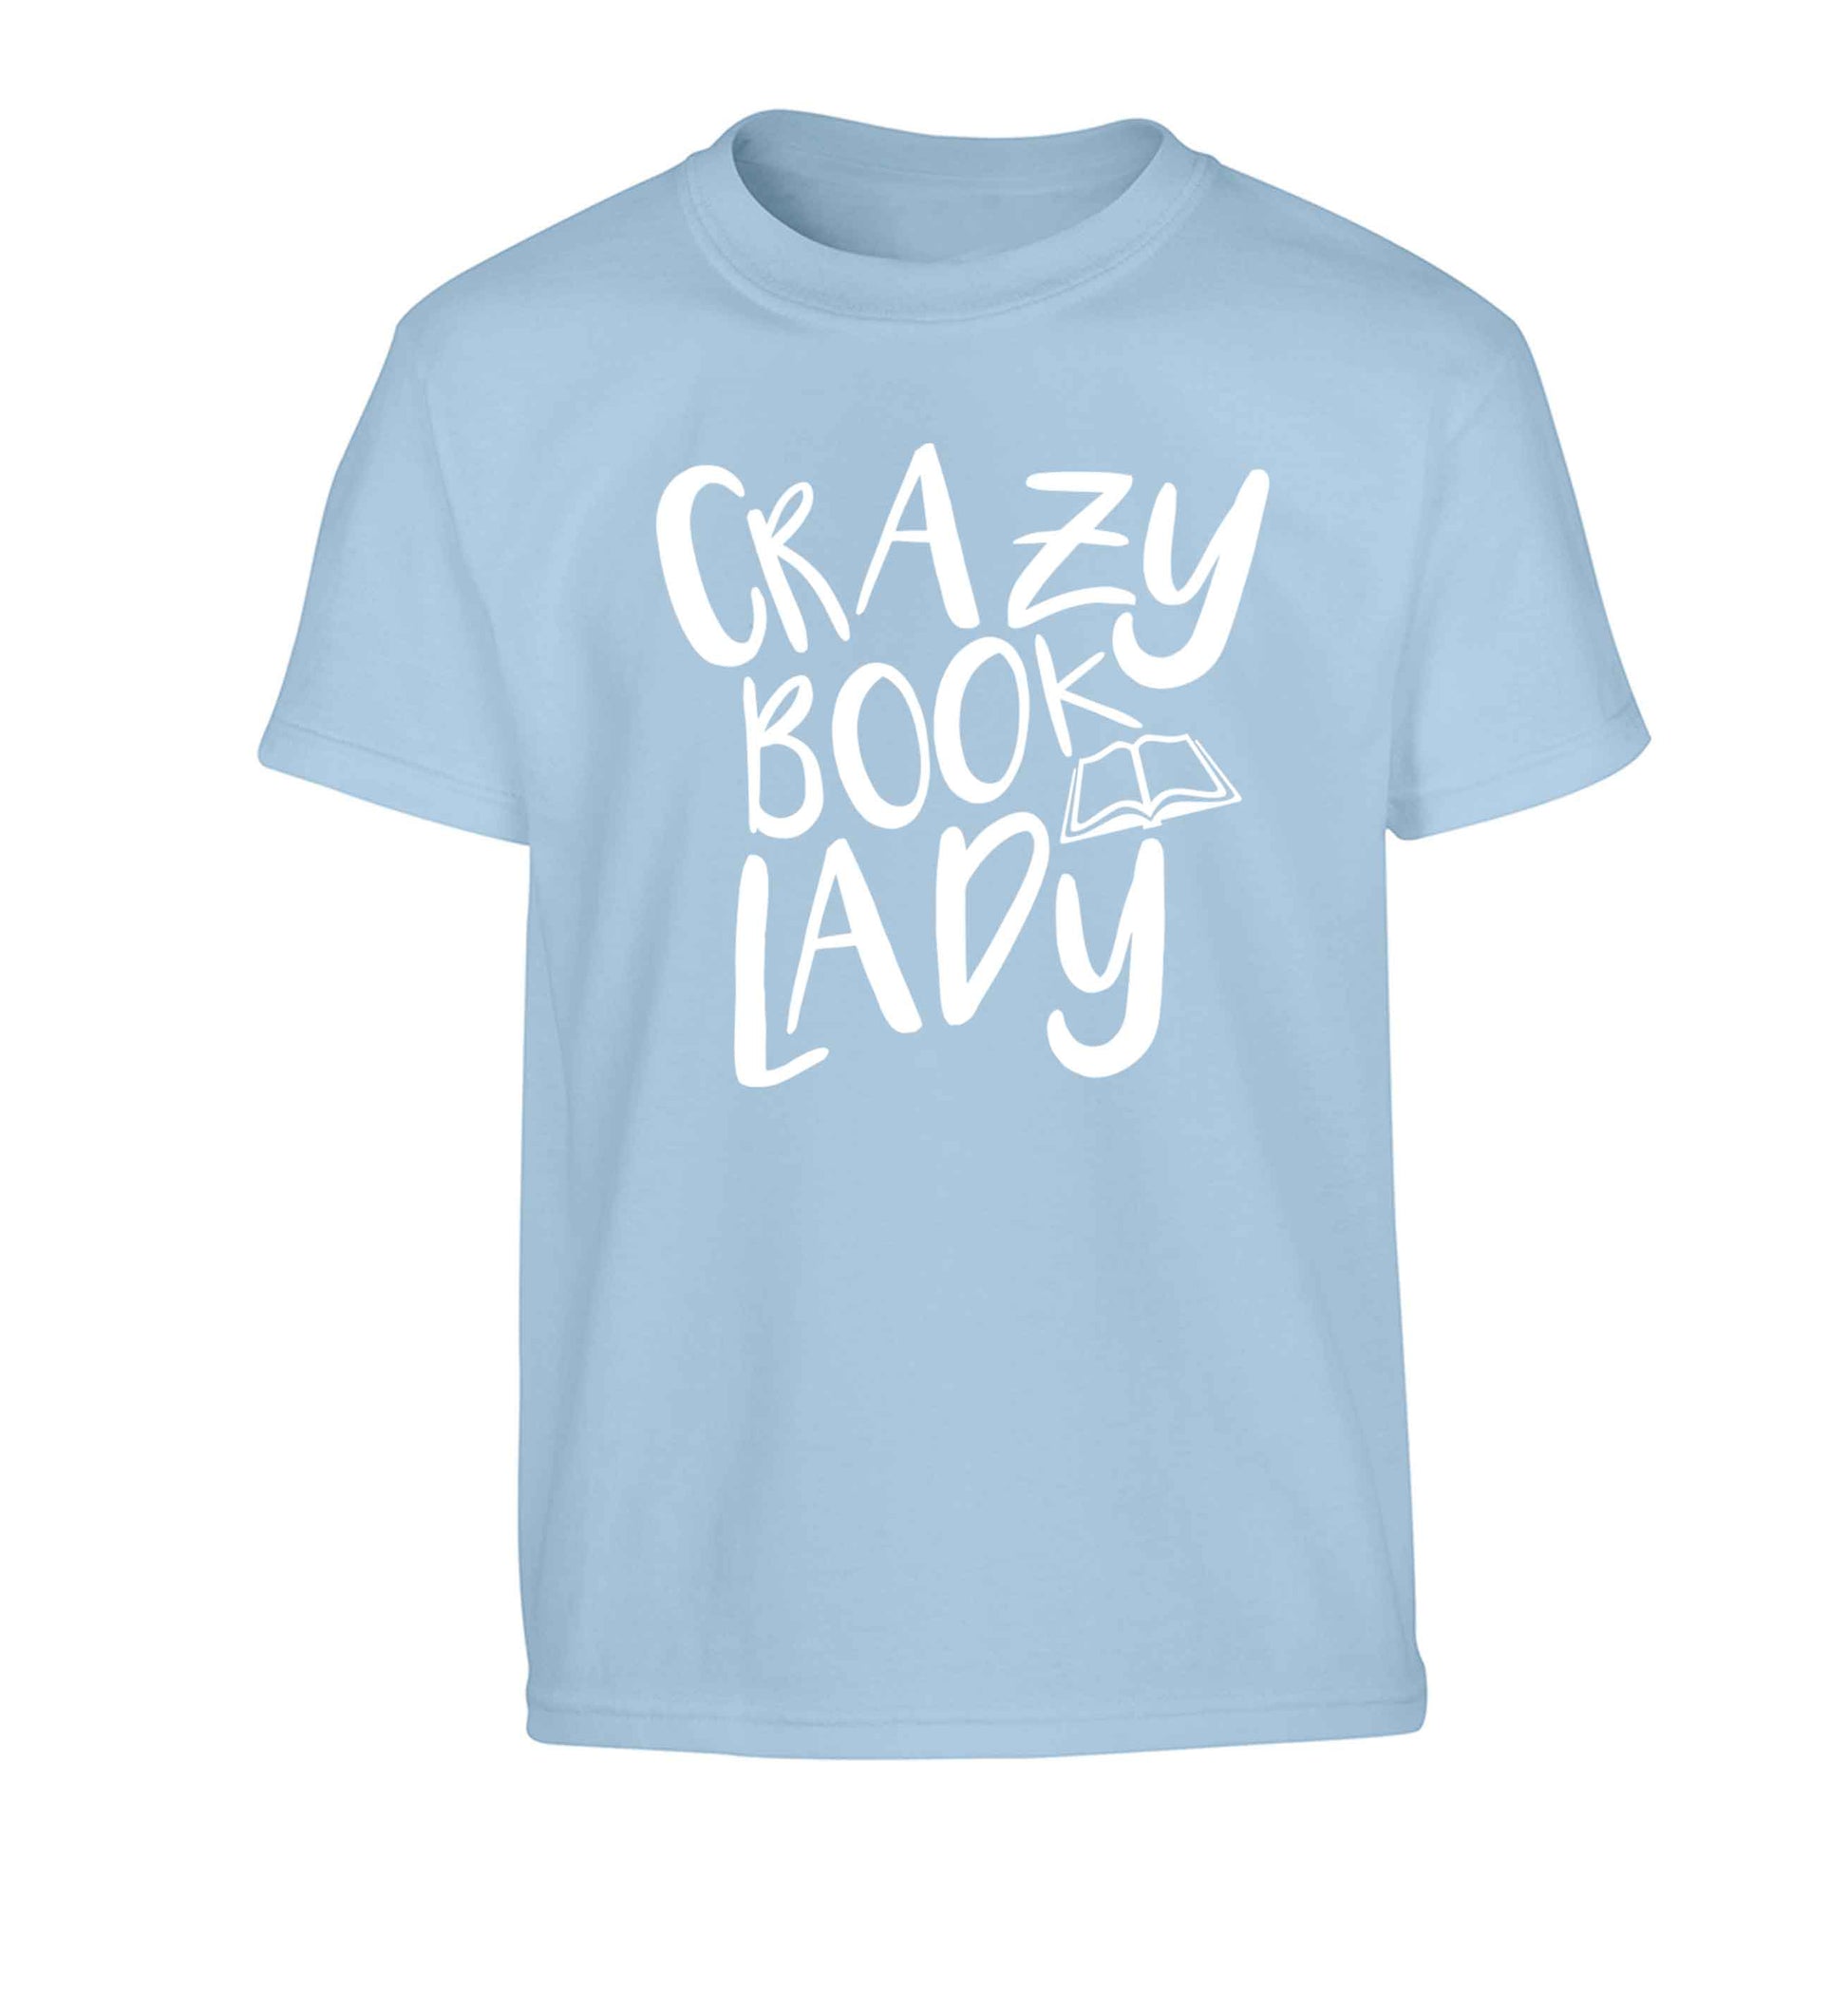 Crazy book lady Children's light blue Tshirt 12-13 Years